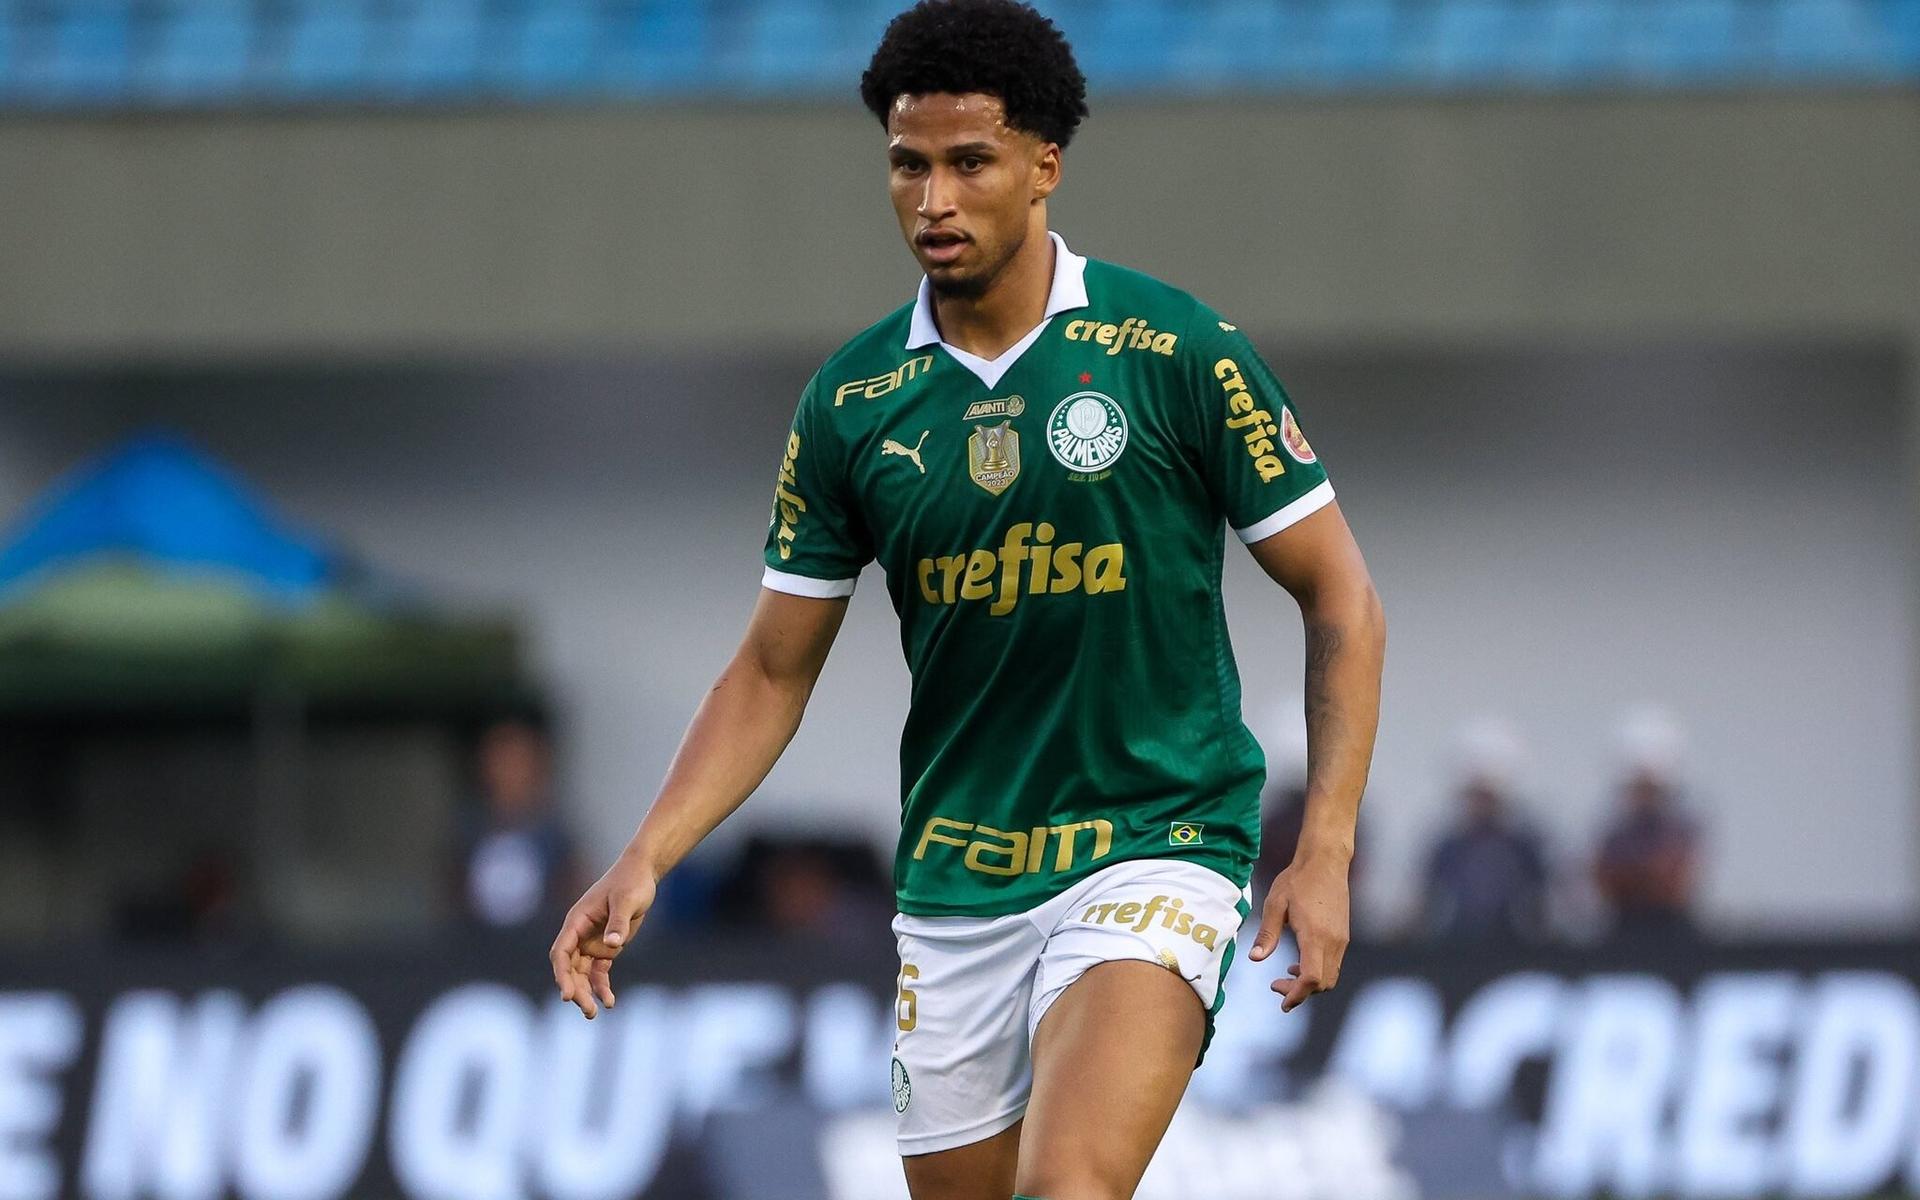 Murilo-Palmeiras-foi-convocado-por-Dorival-Junior-na-Selecao-Brasileira-aspect-ratio-512-320